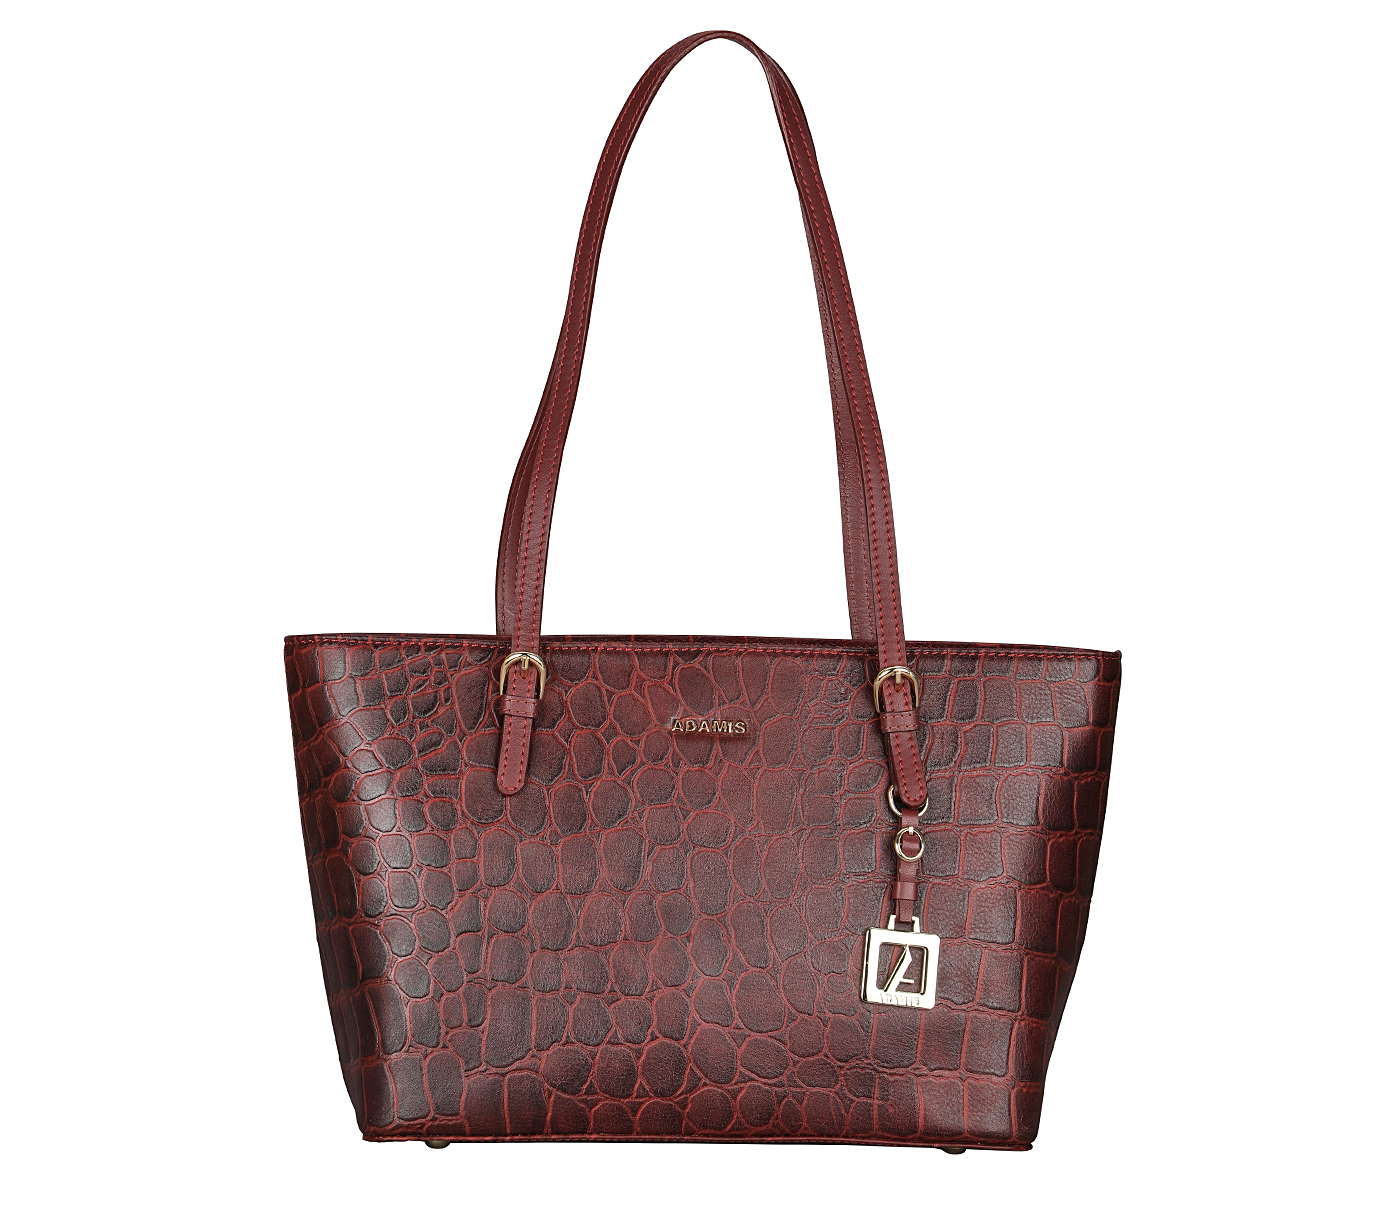 B887-Diana-Shoulder work bag in Genuine Leather - Wine